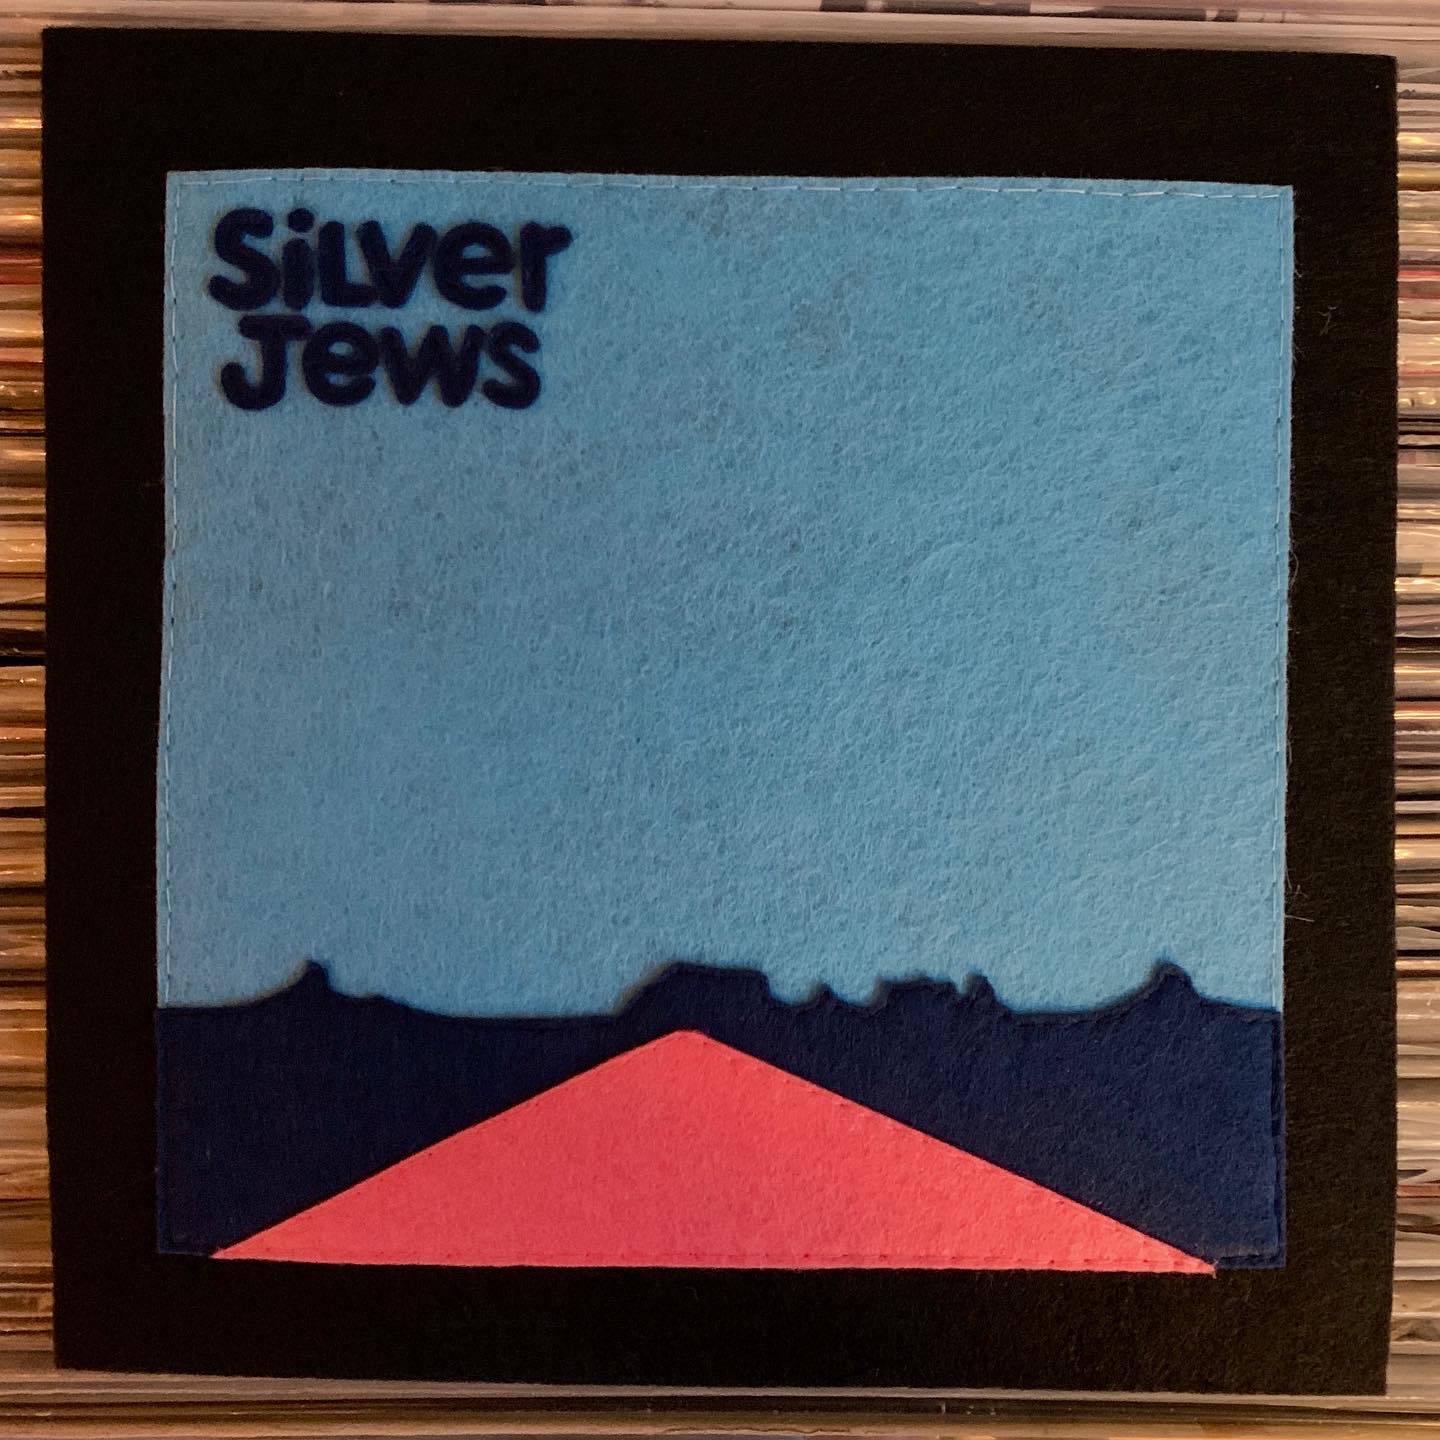 Silver Jews – American Water (1998)